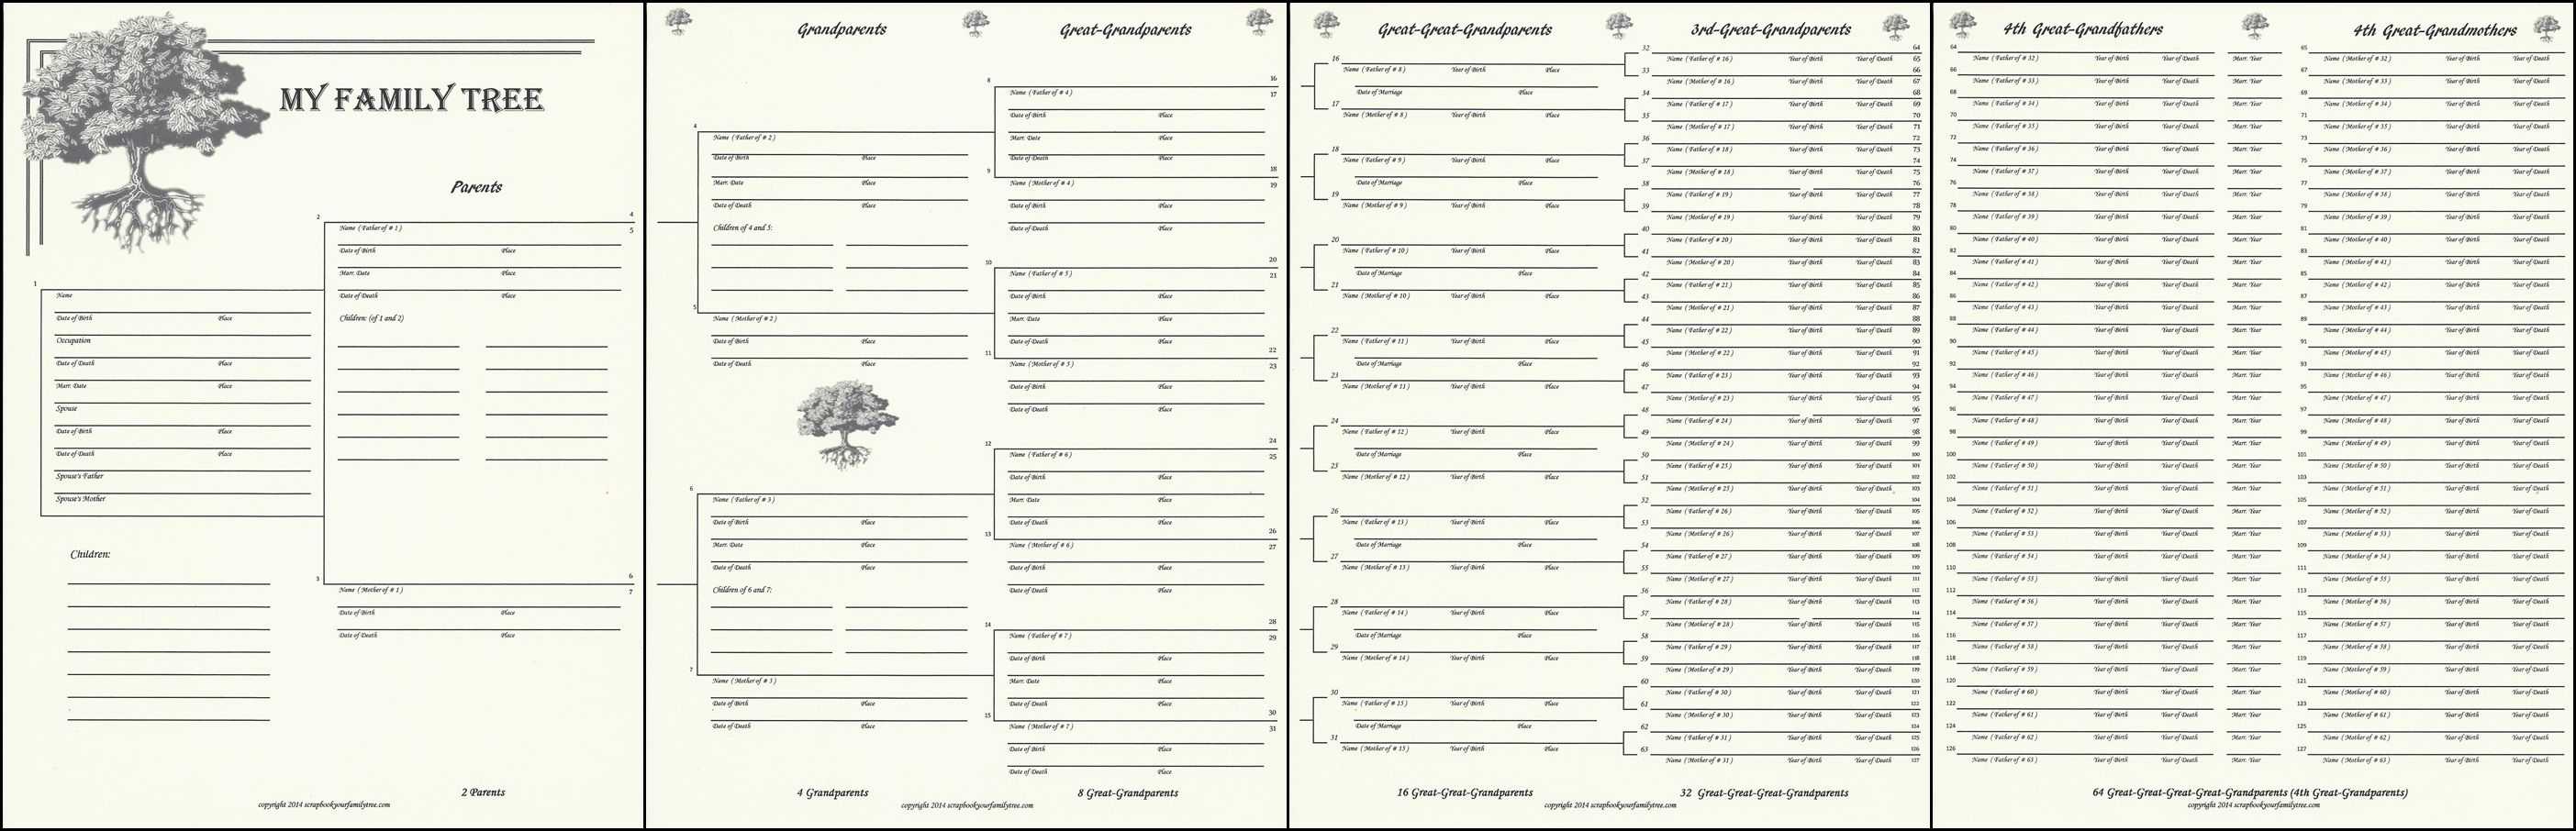 Pedigree Analysis Worksheet or My Family Tree 7 Generation Pedigree Chart